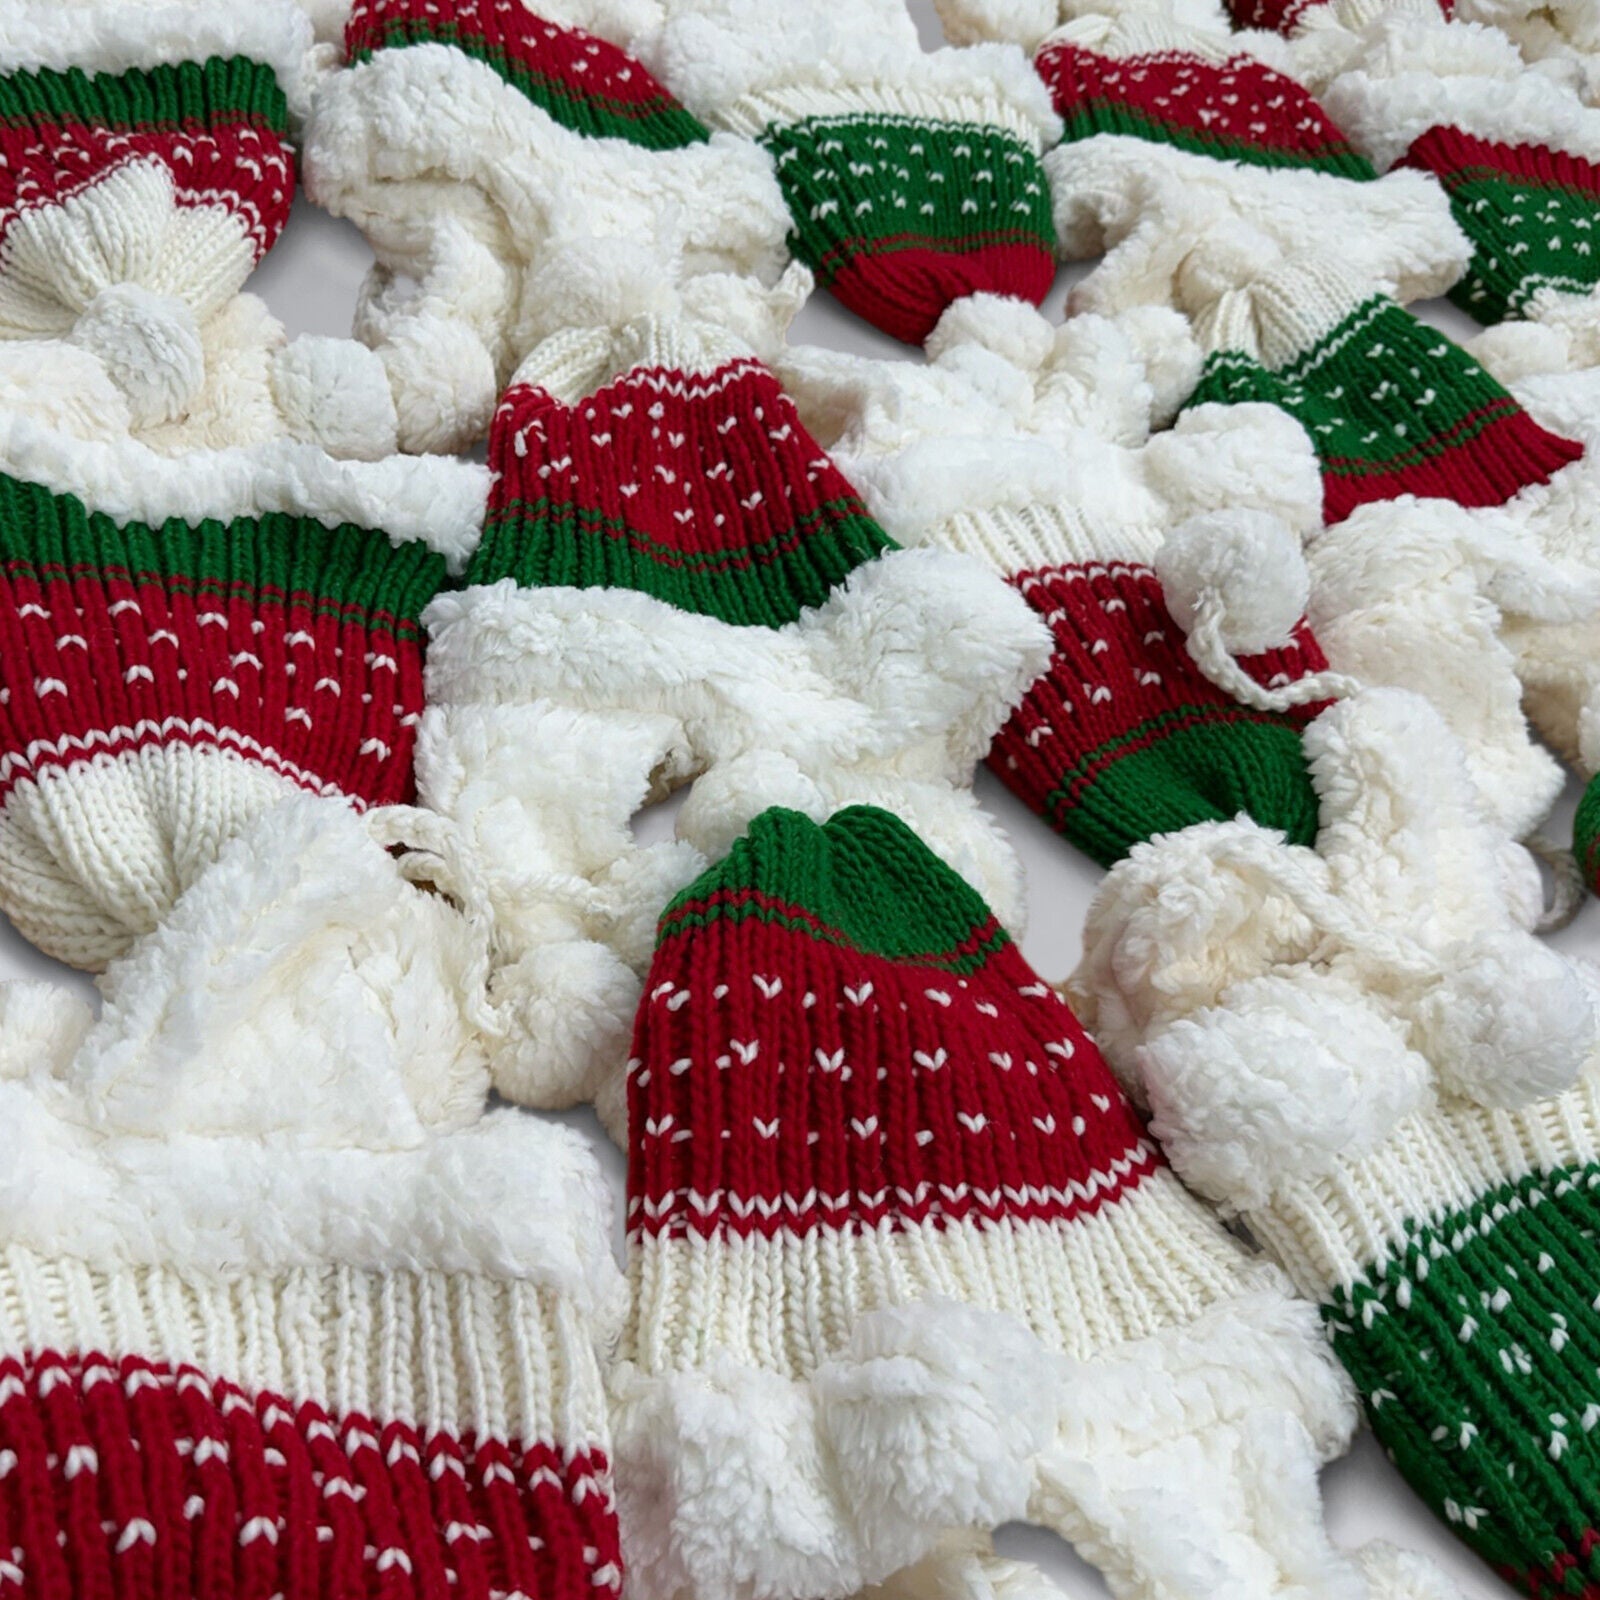 FREE Babahoyo Cable Knit Alpaca Wool Unisex Chullo Beanie Pom Pom Christmas Hat